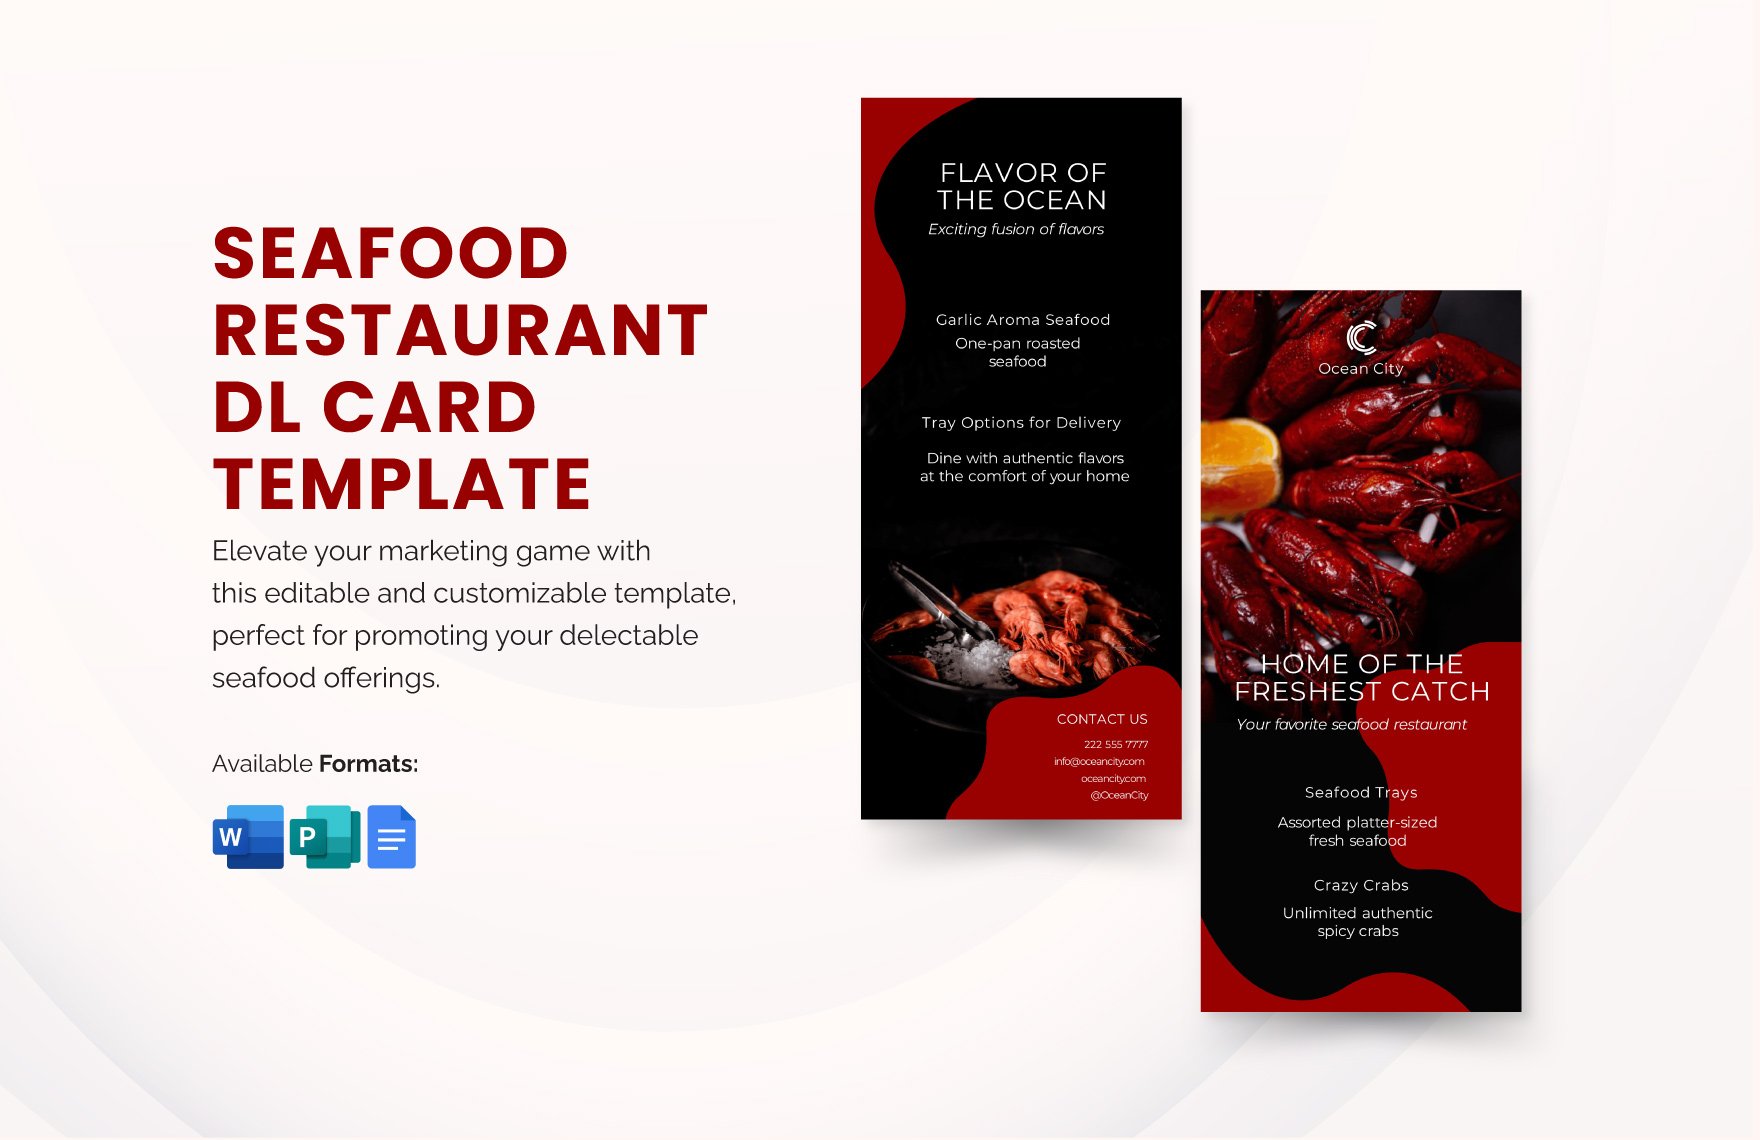 Seafood Restaurant DL Card Template